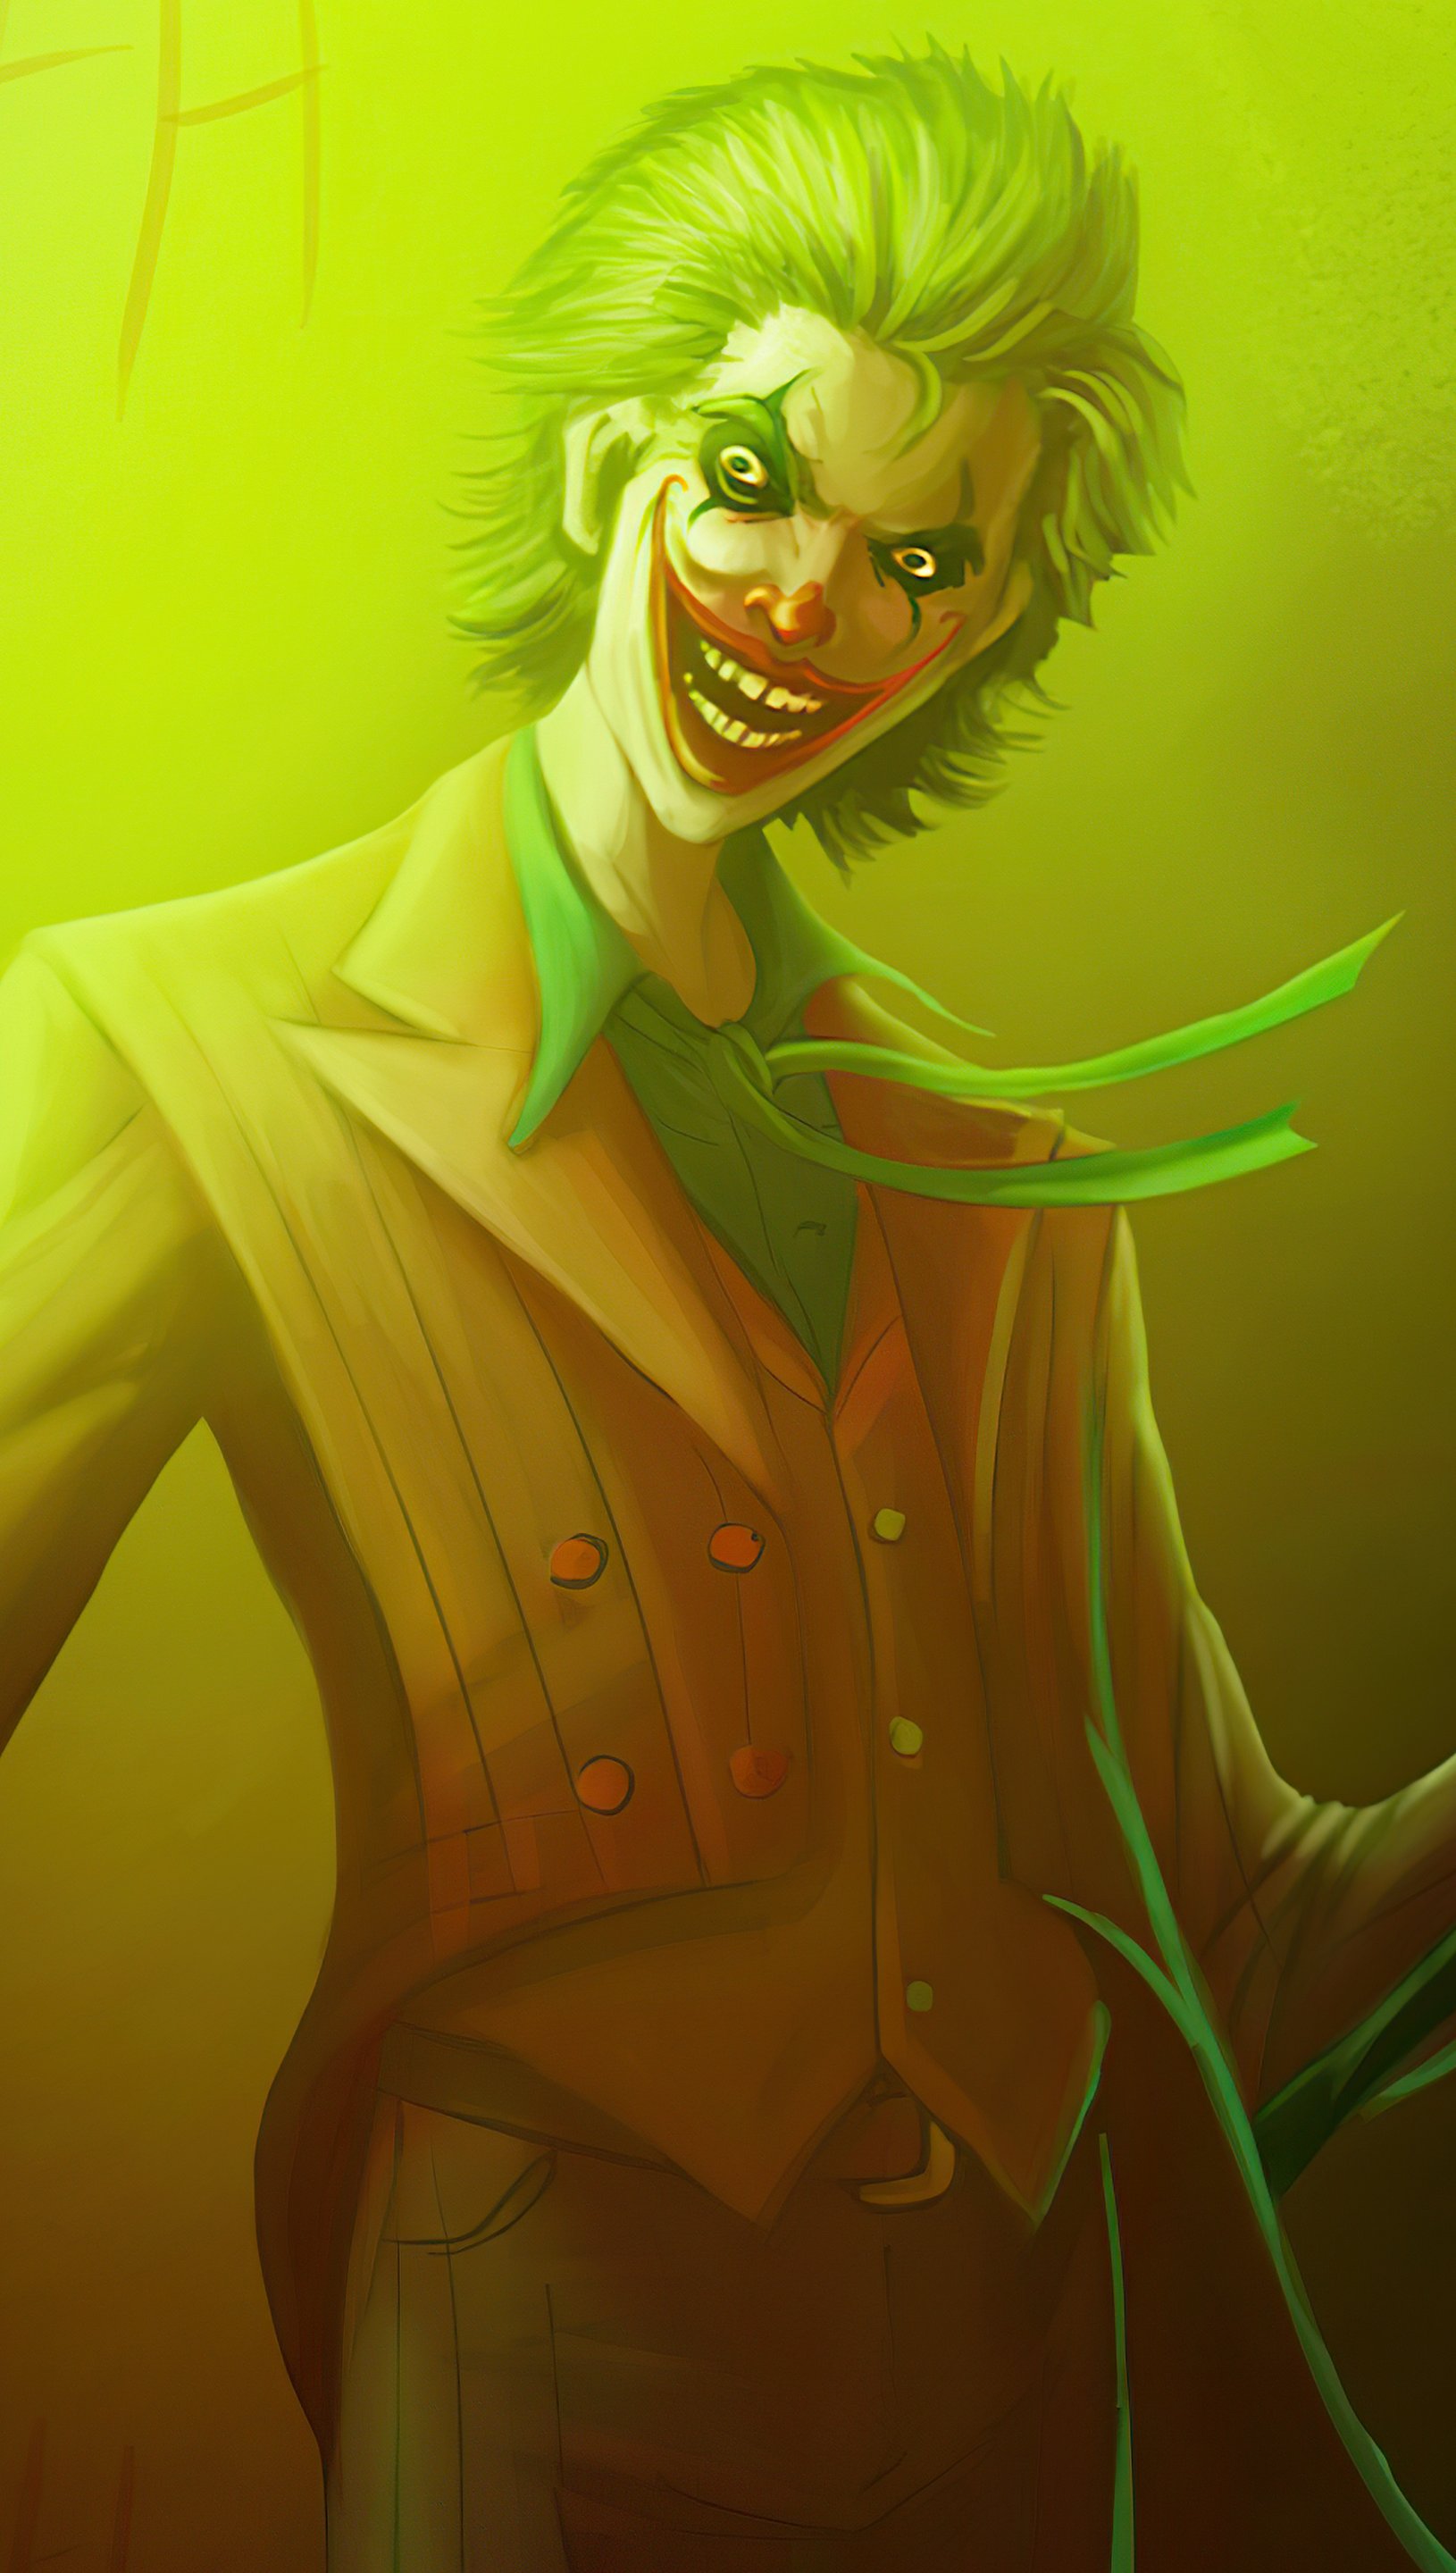 Joker Graphic art Wallpaper 5k Ultra HD ID:7516